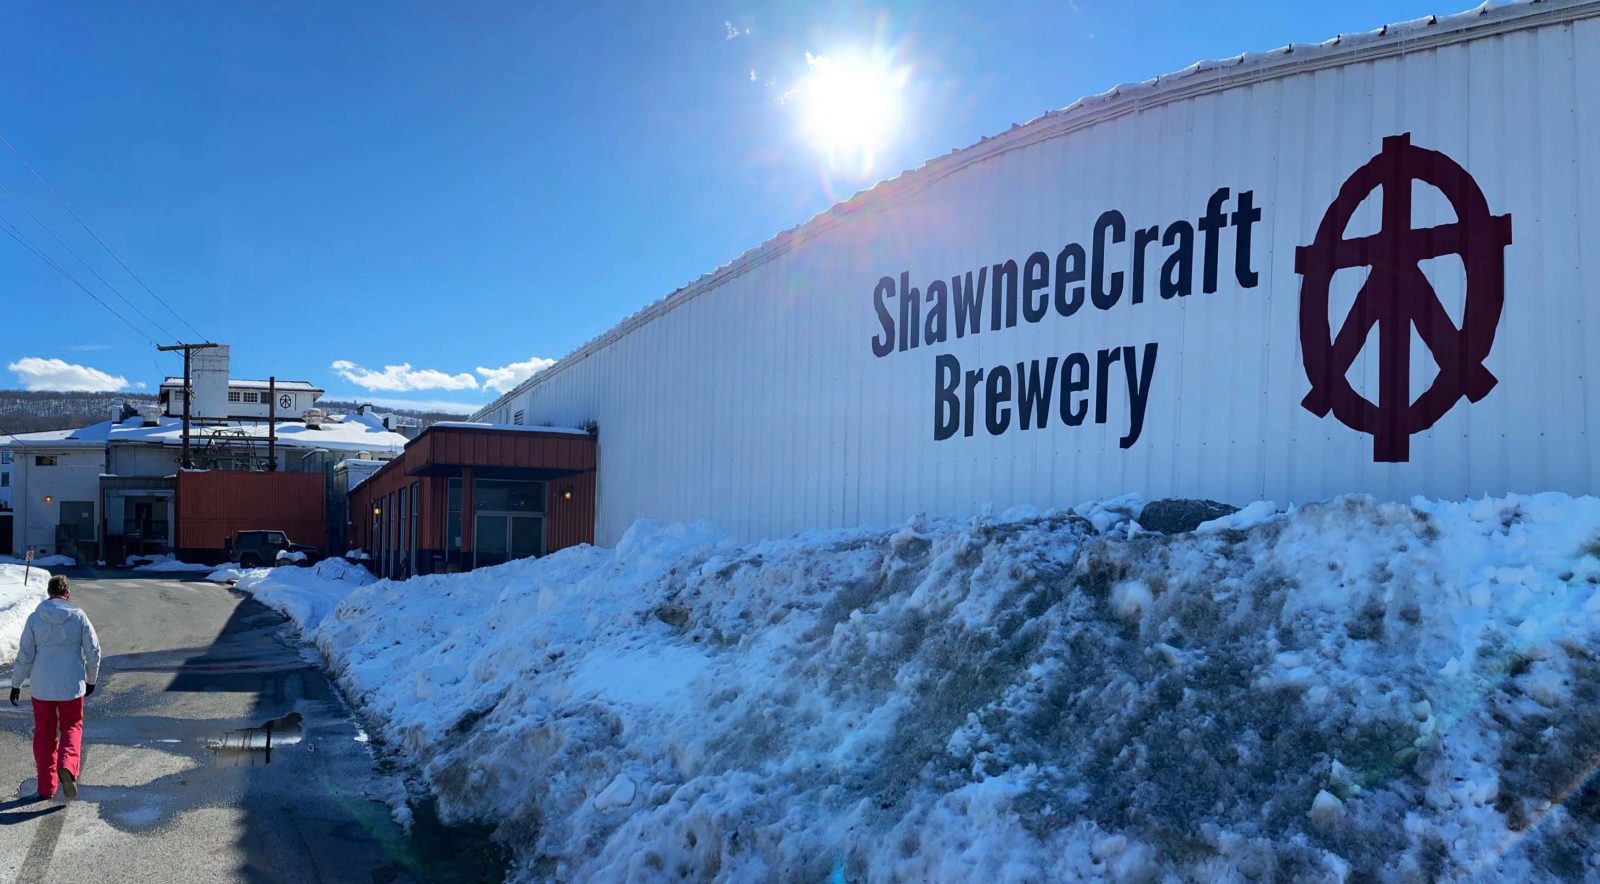 482. Shawnee Craft Brewery, Delaware Water Gap PA, 2021